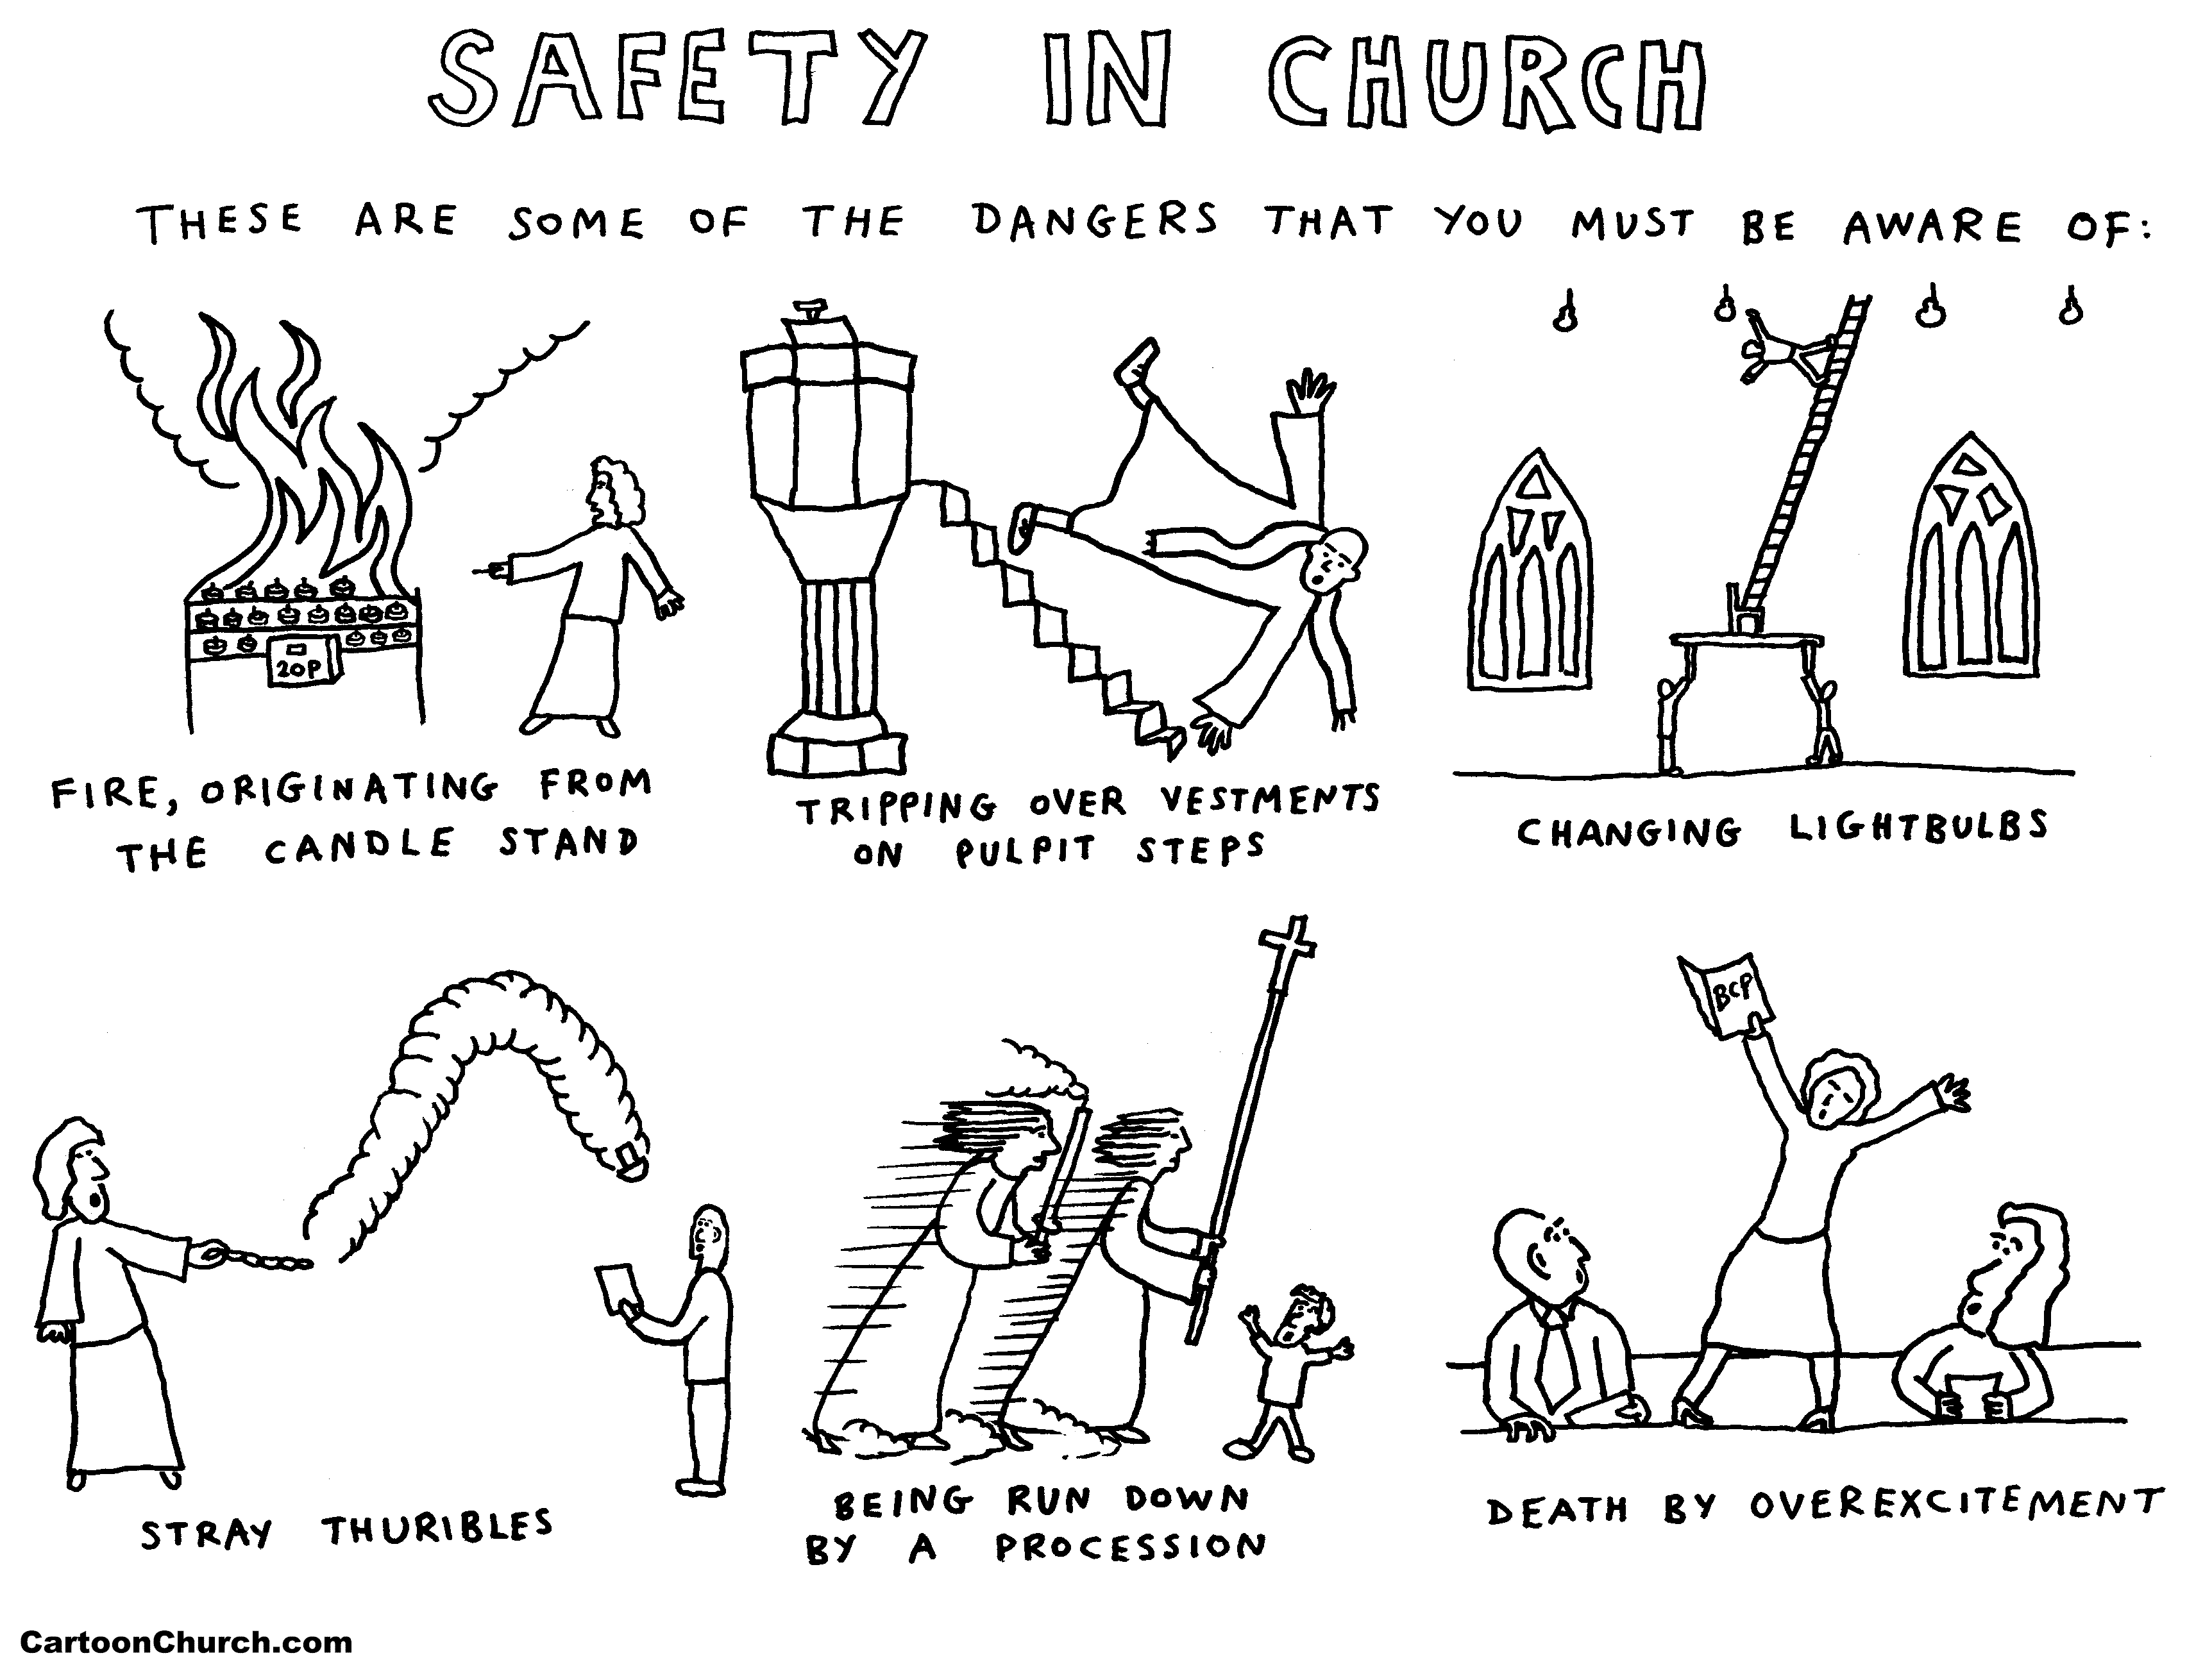 Safety in church — CartoonChurch.com